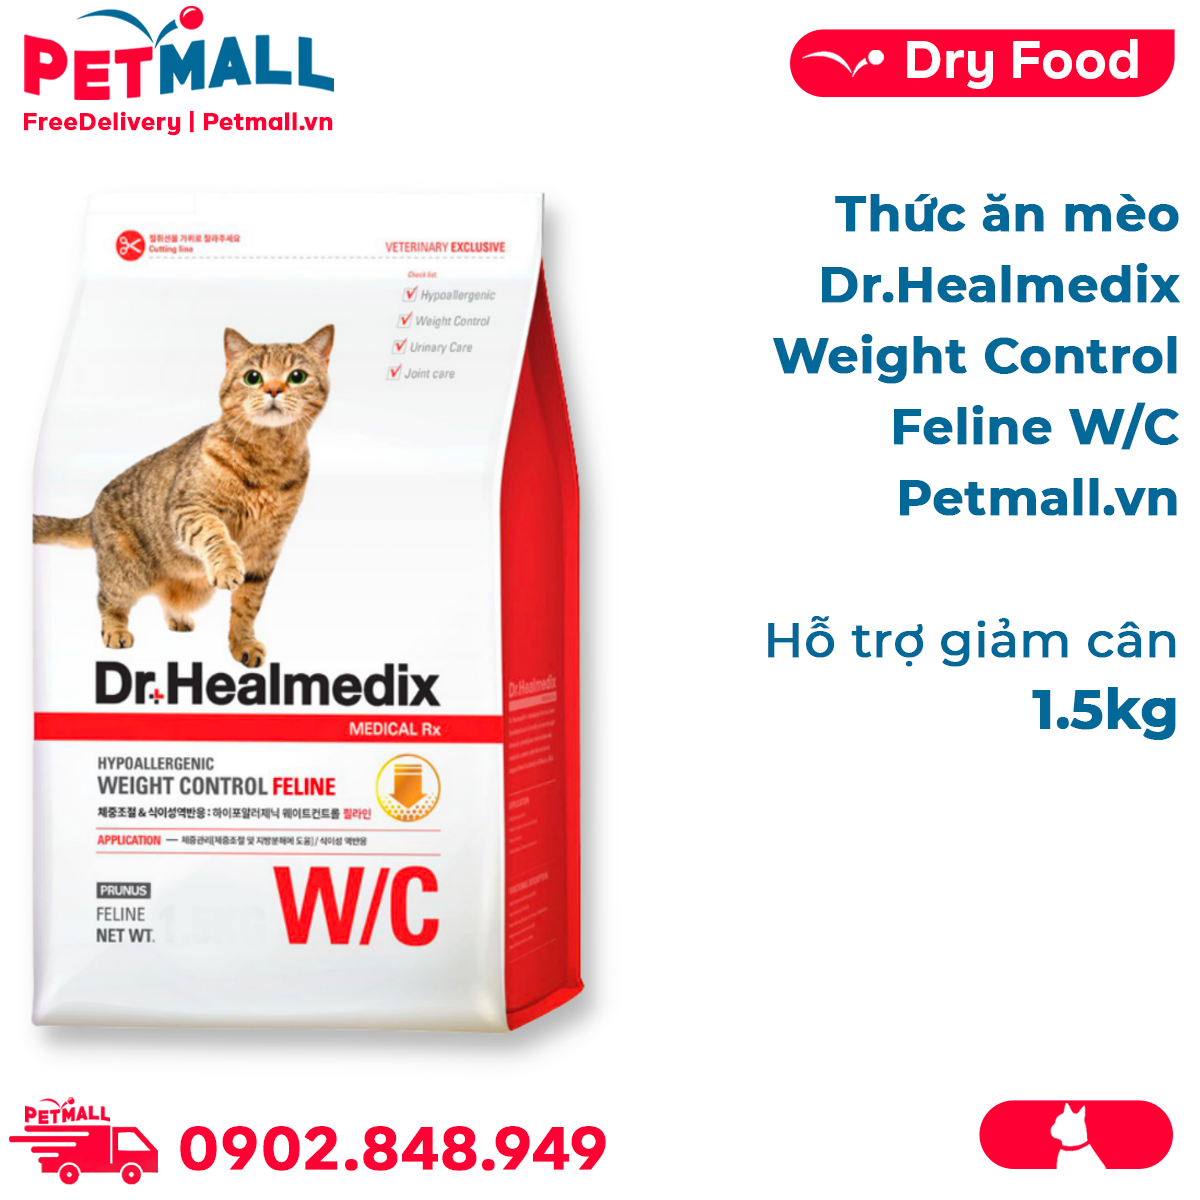 Thức ăn mèo Dr.Healmedix Weight Control Feline W C 1.5kg